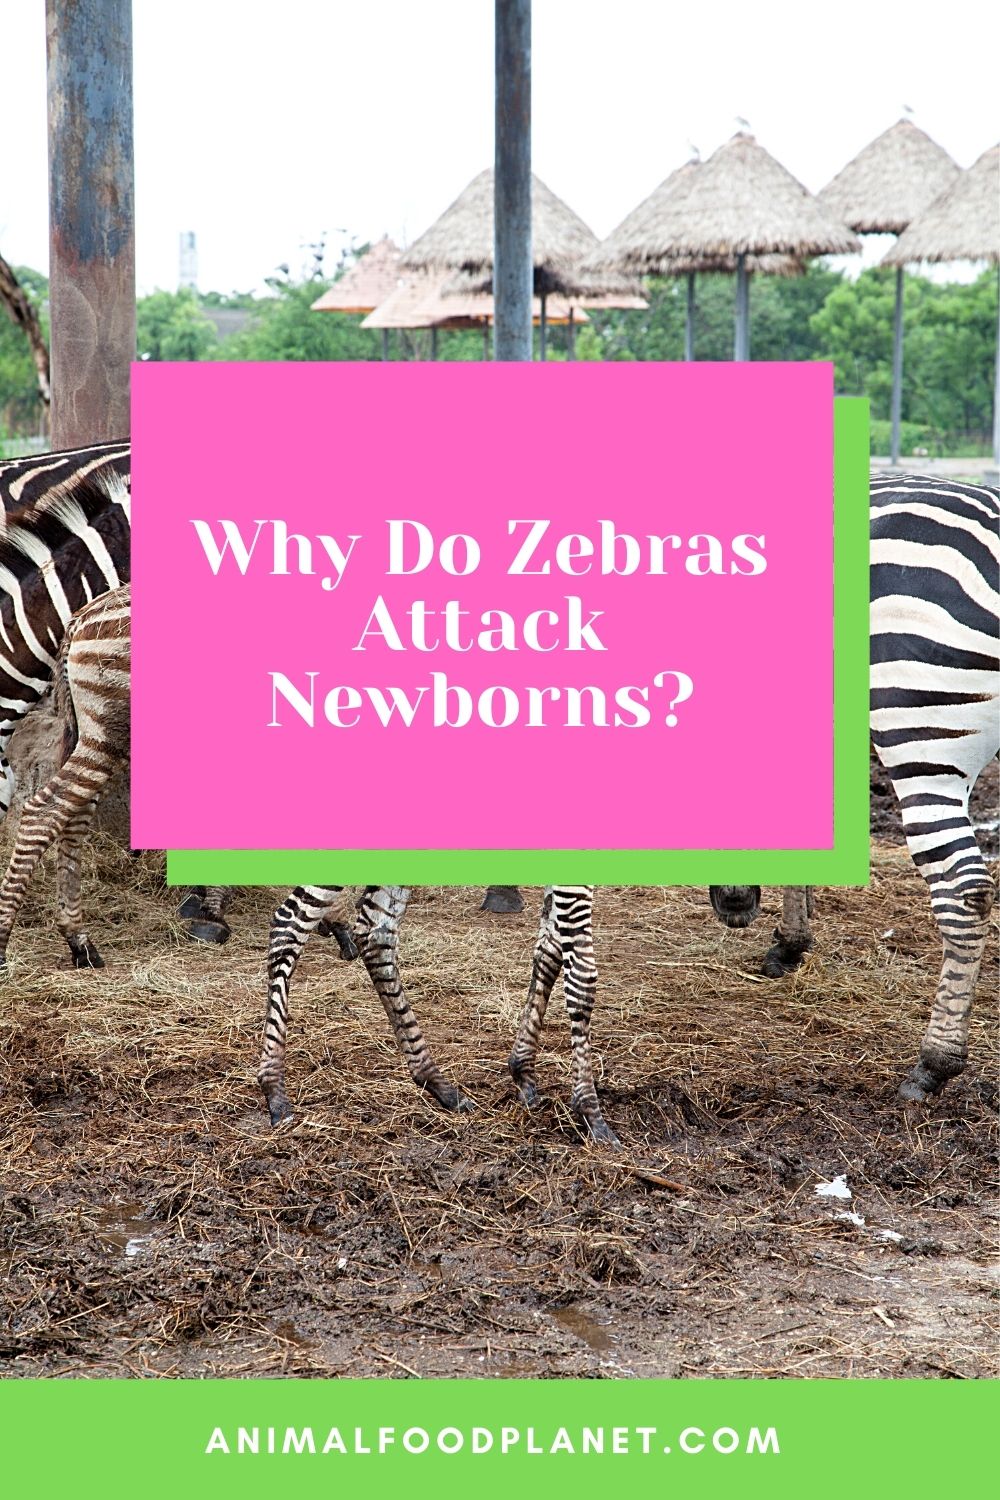 Why Do Zebras Attack Newborns?